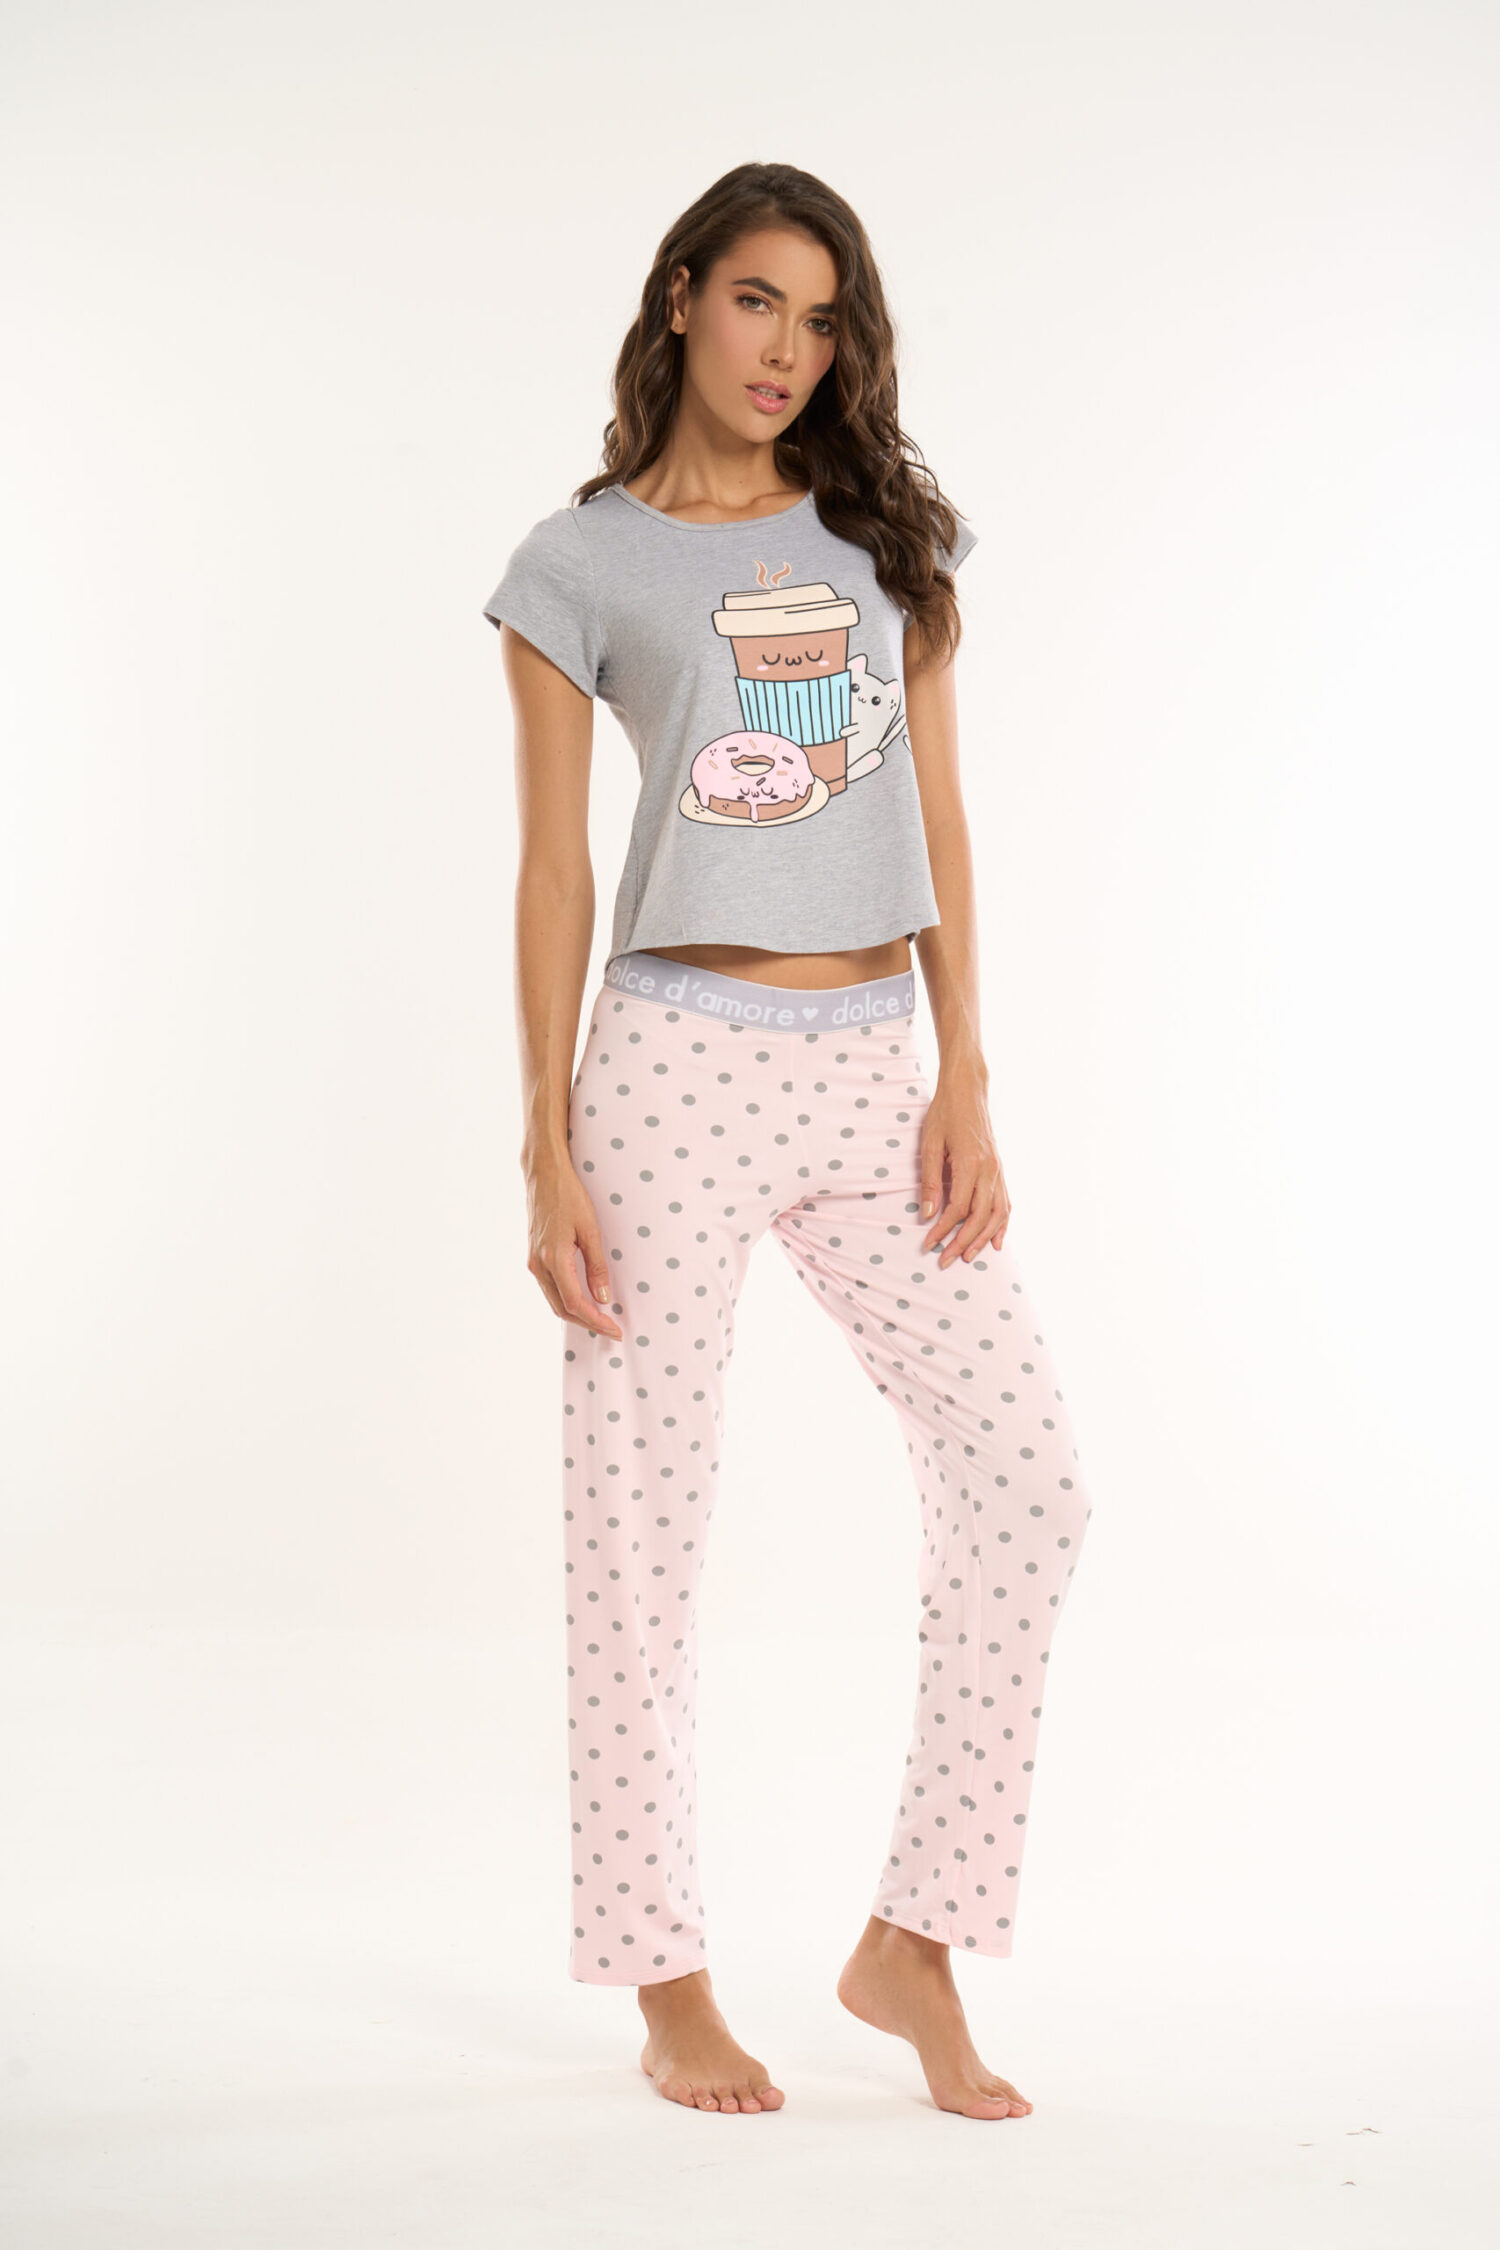 Imagen del producto: Pantalon elastico rosado bols grises camiseta coffe and donut